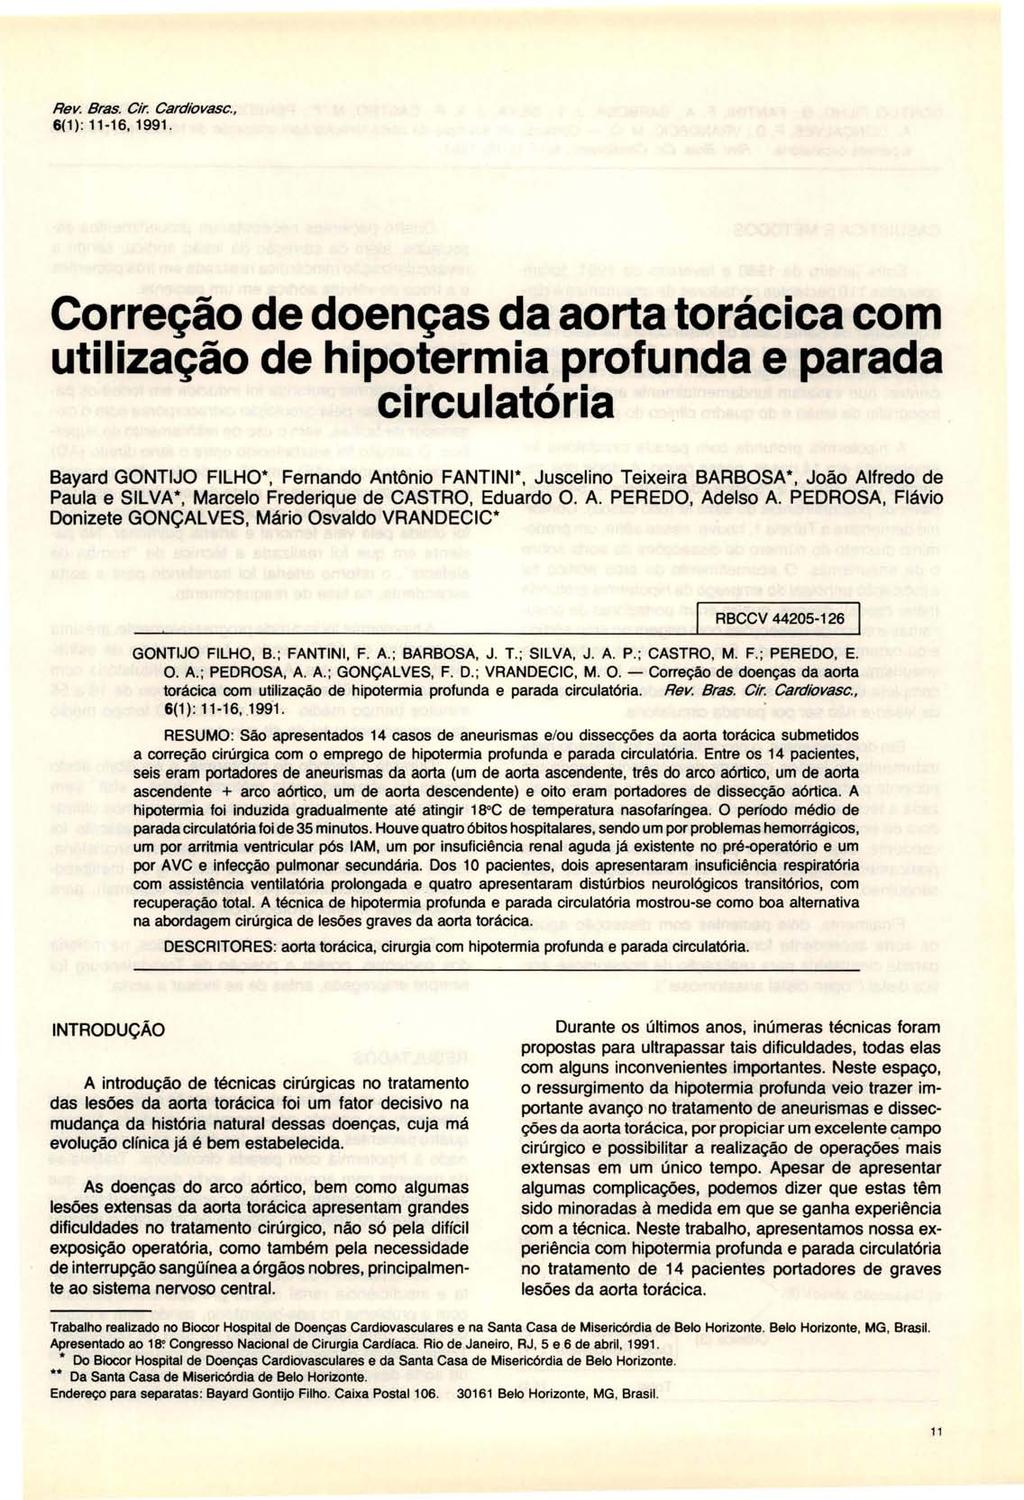 Rev. Bras. Cir. Cardiovasc., 6(1) : 11-16, 1991.